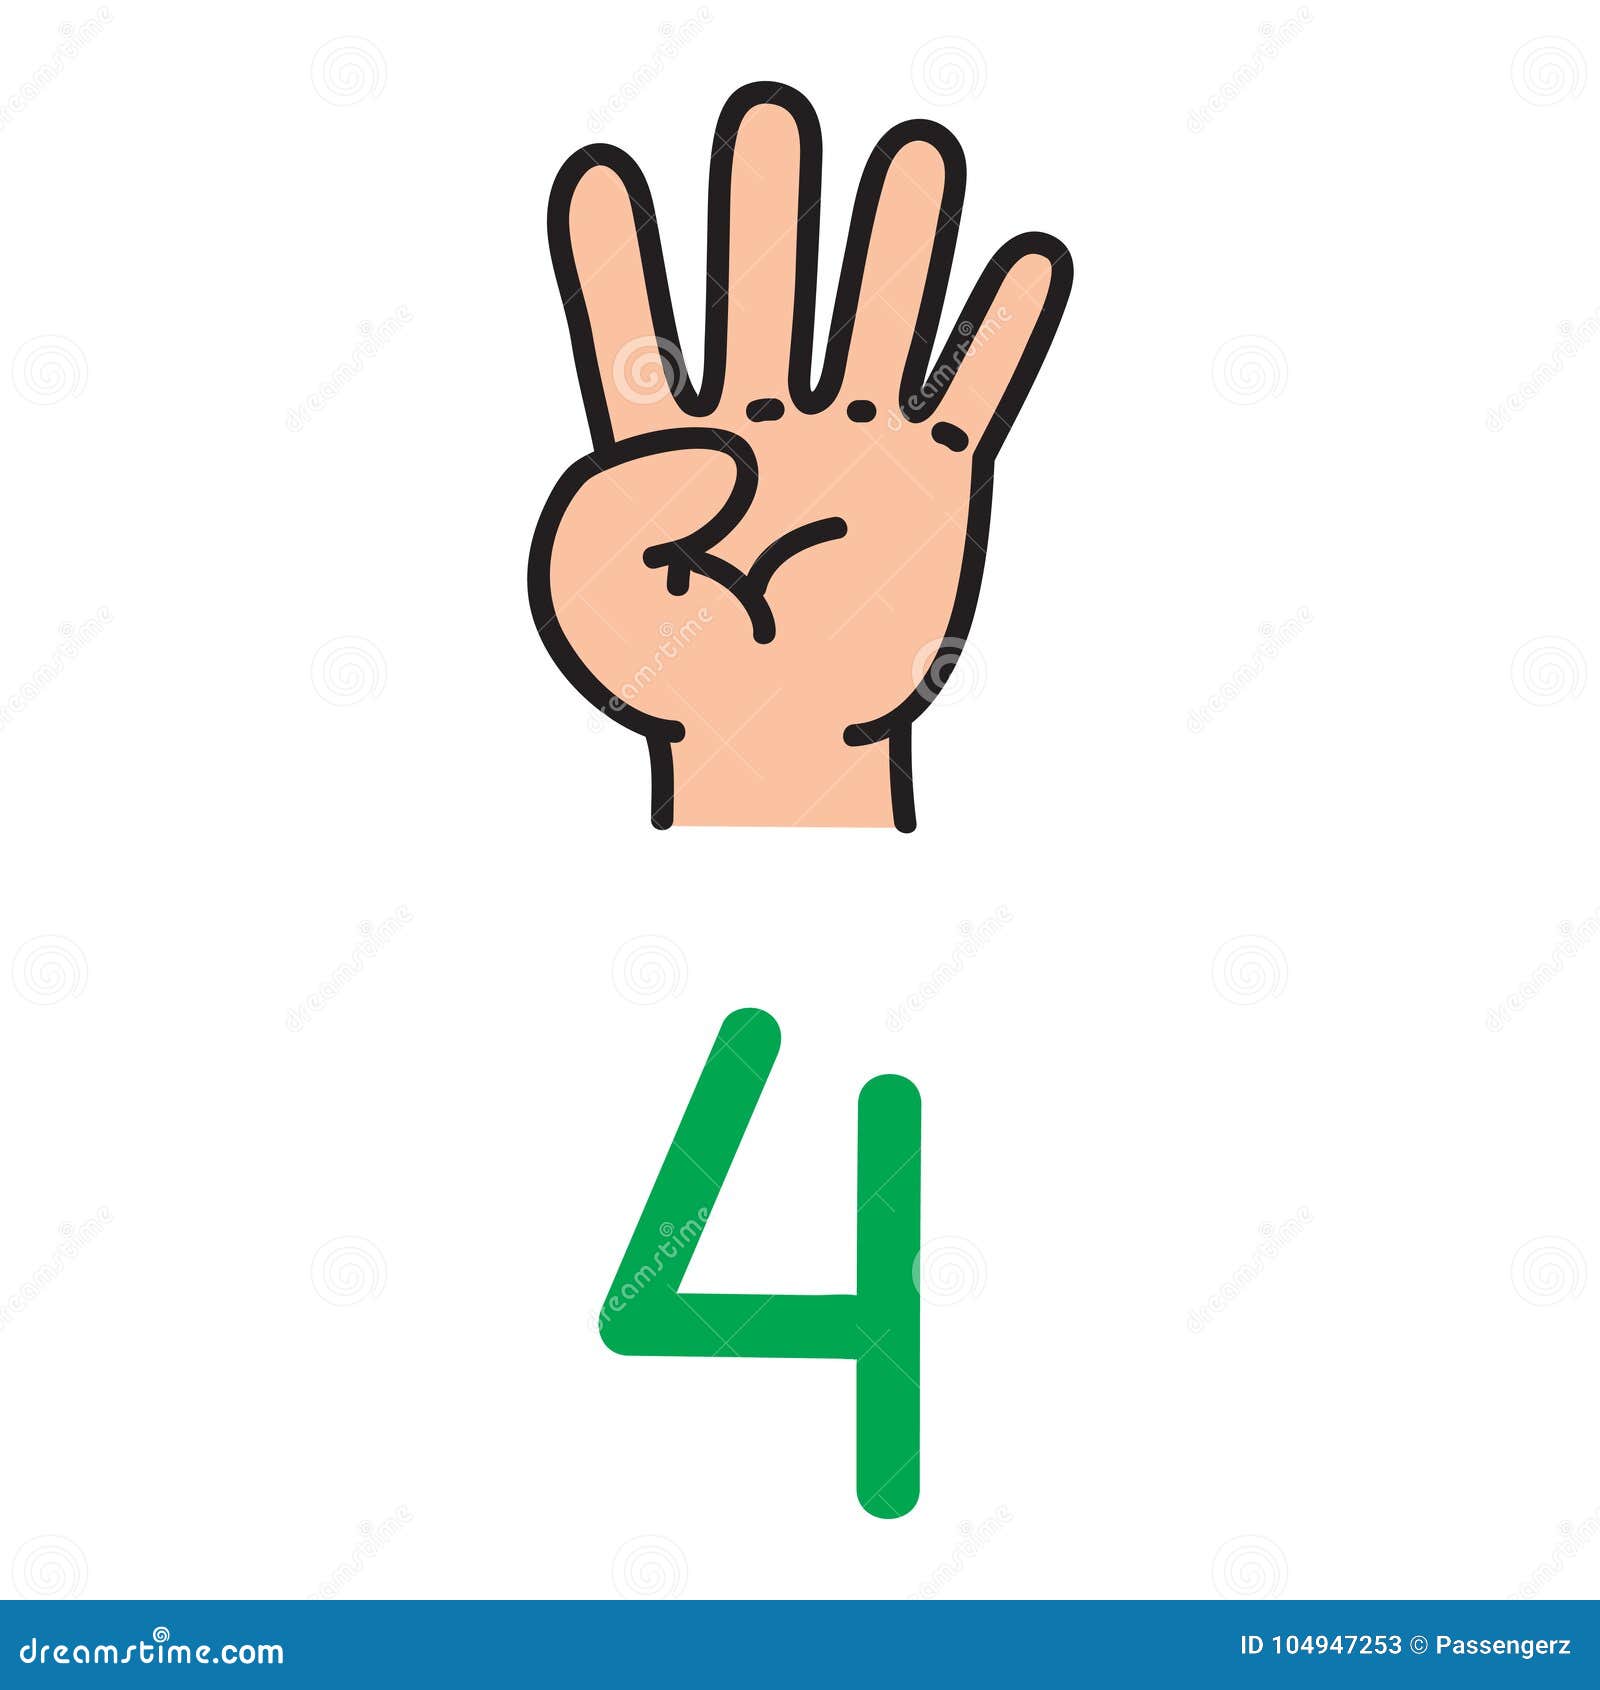 2 2 четыре пальца. Цифры на пальцах для детей. Числа на пальцах для детей. Счет на пальцах для детей. Цифра 4 на пальцах.